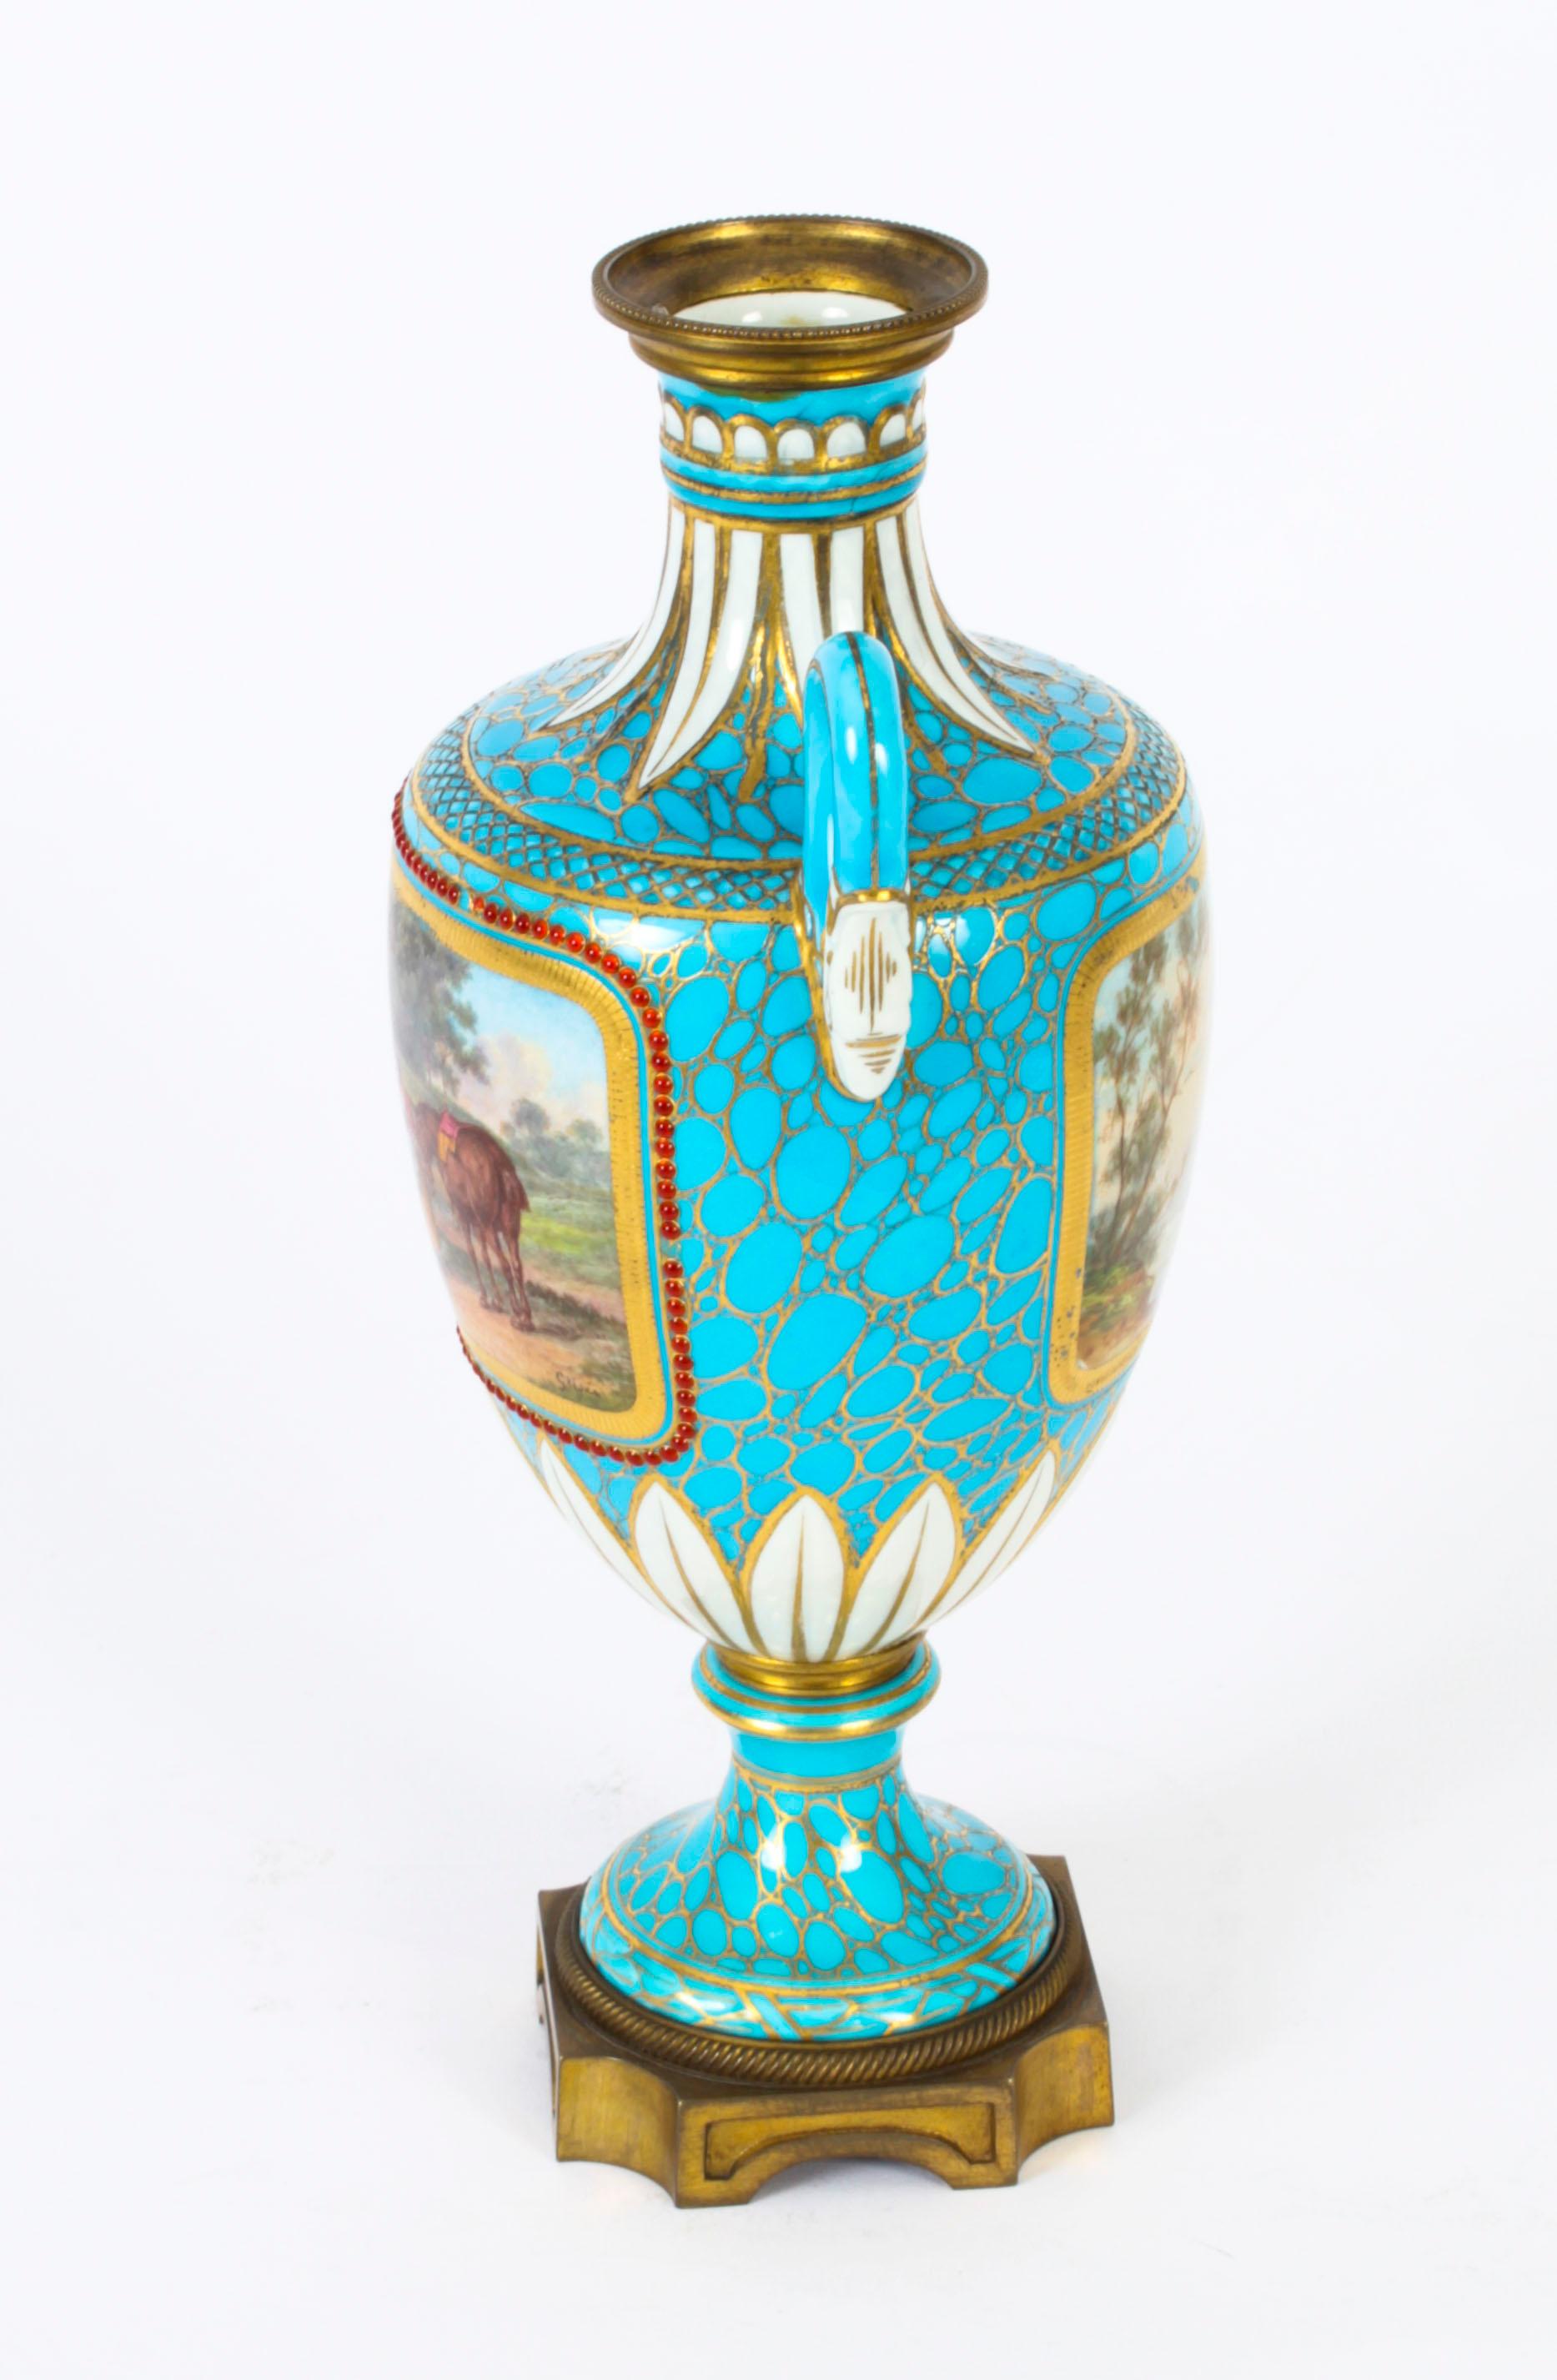 Antique Pair of French Bleu Celeste Porcelain Urns 19th Century For Sale 14